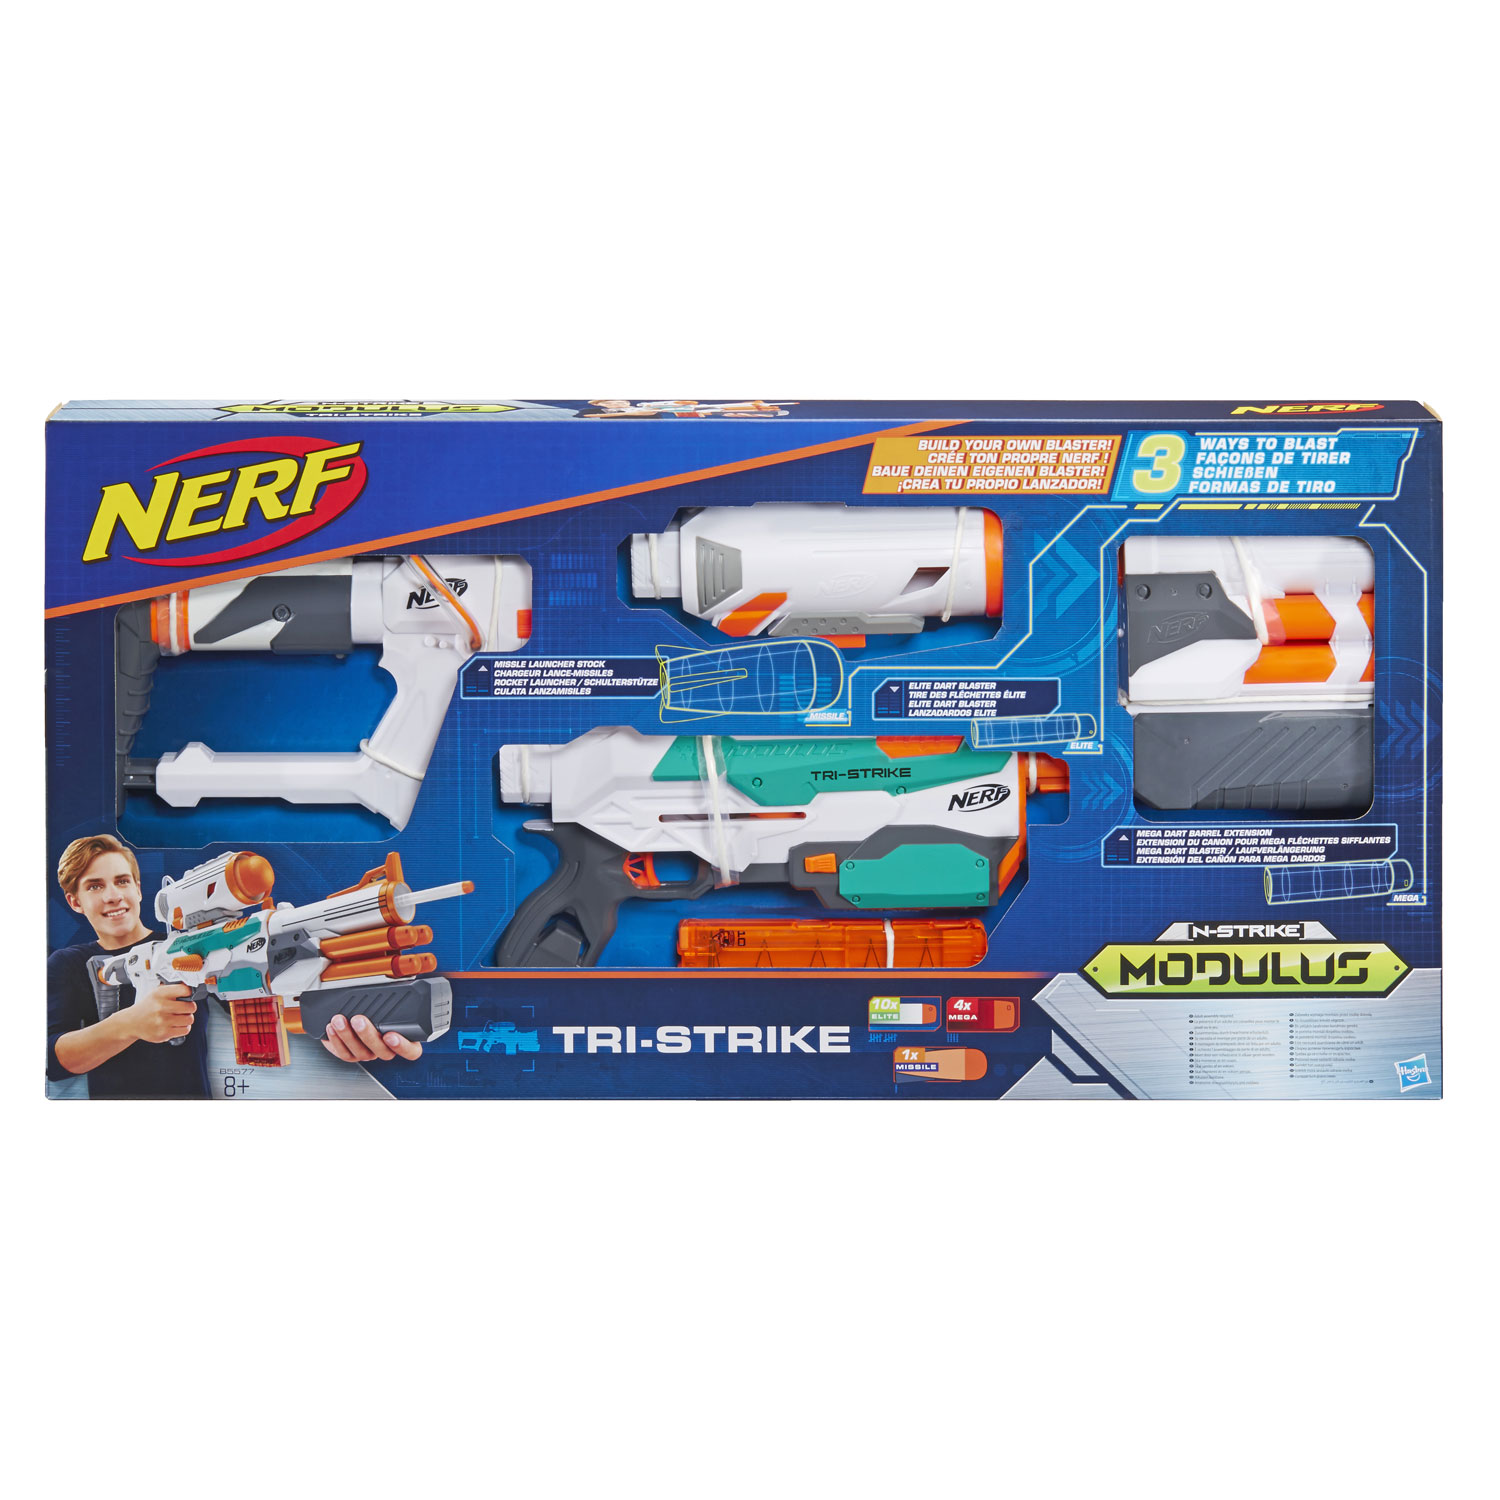 NERF Modulus Tri-Strike Blaster Toy for sale online 